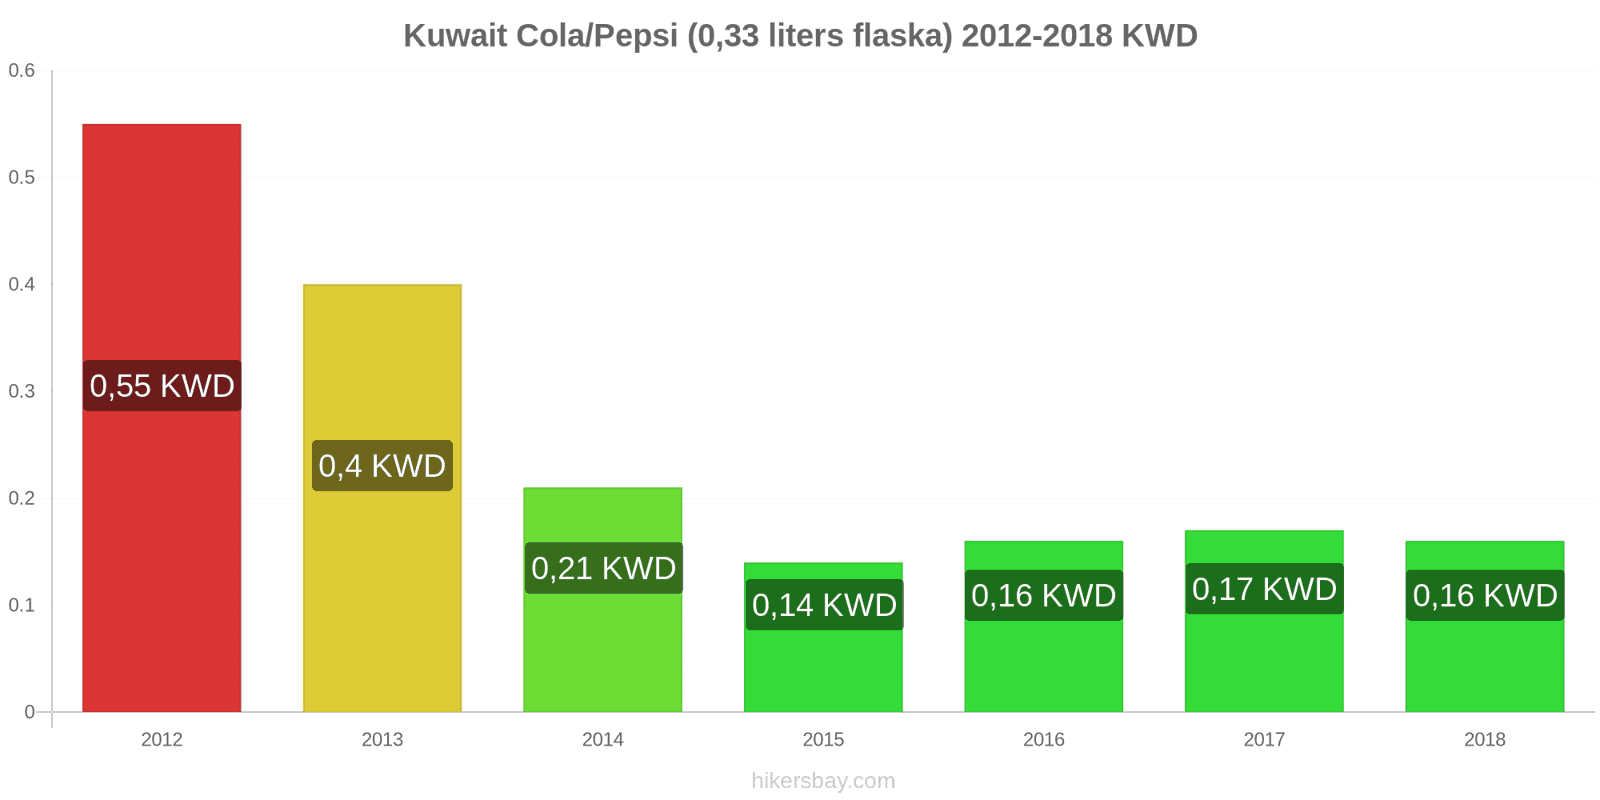 Kuwait prisändringar Coca-Cola/Pepsi (0.33 liters flaska) hikersbay.com